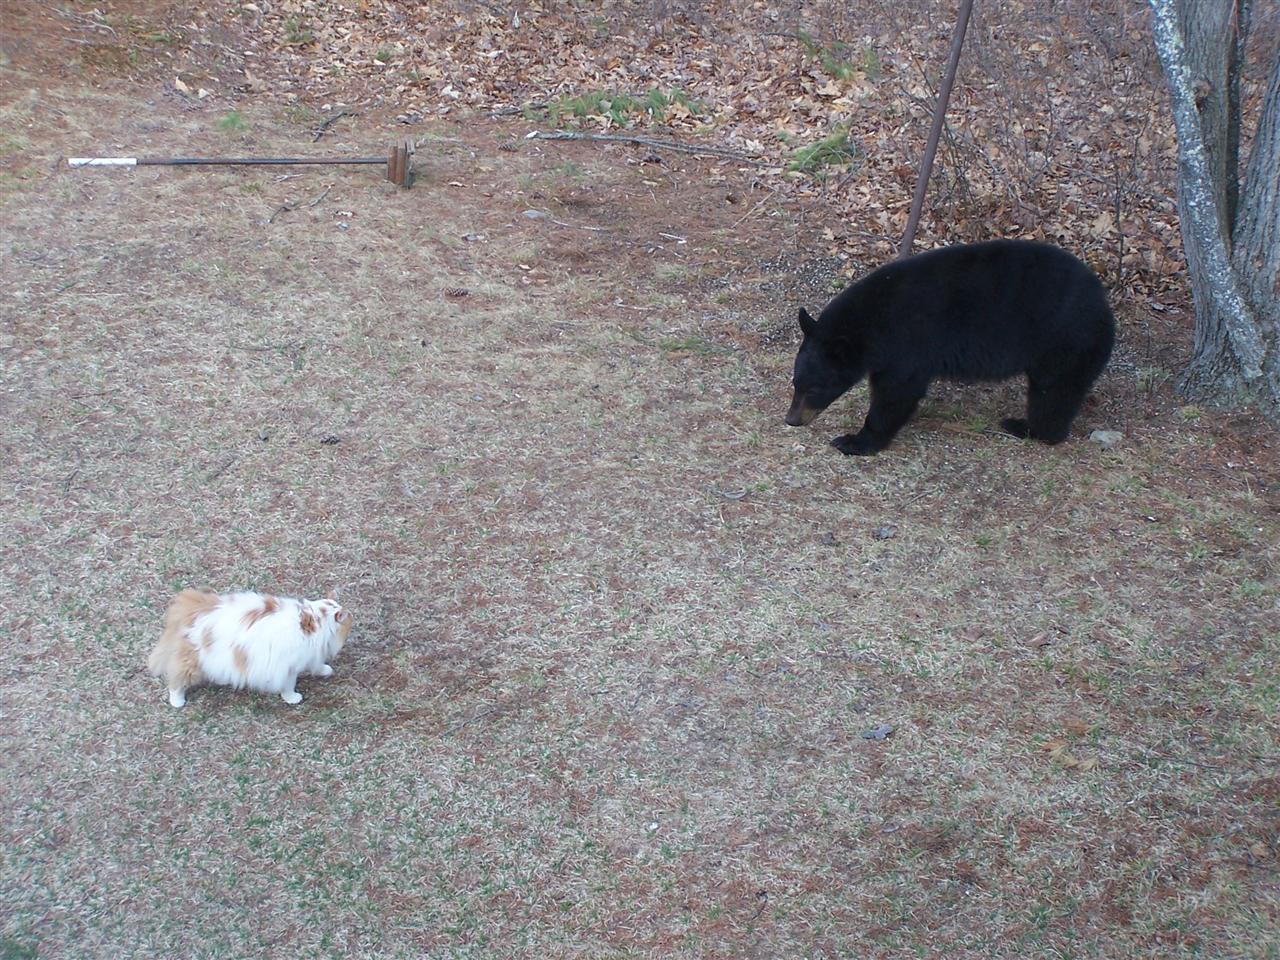 BLACK BEAR VS CAT FOR CONTROL OF THE BIRD FEEDER